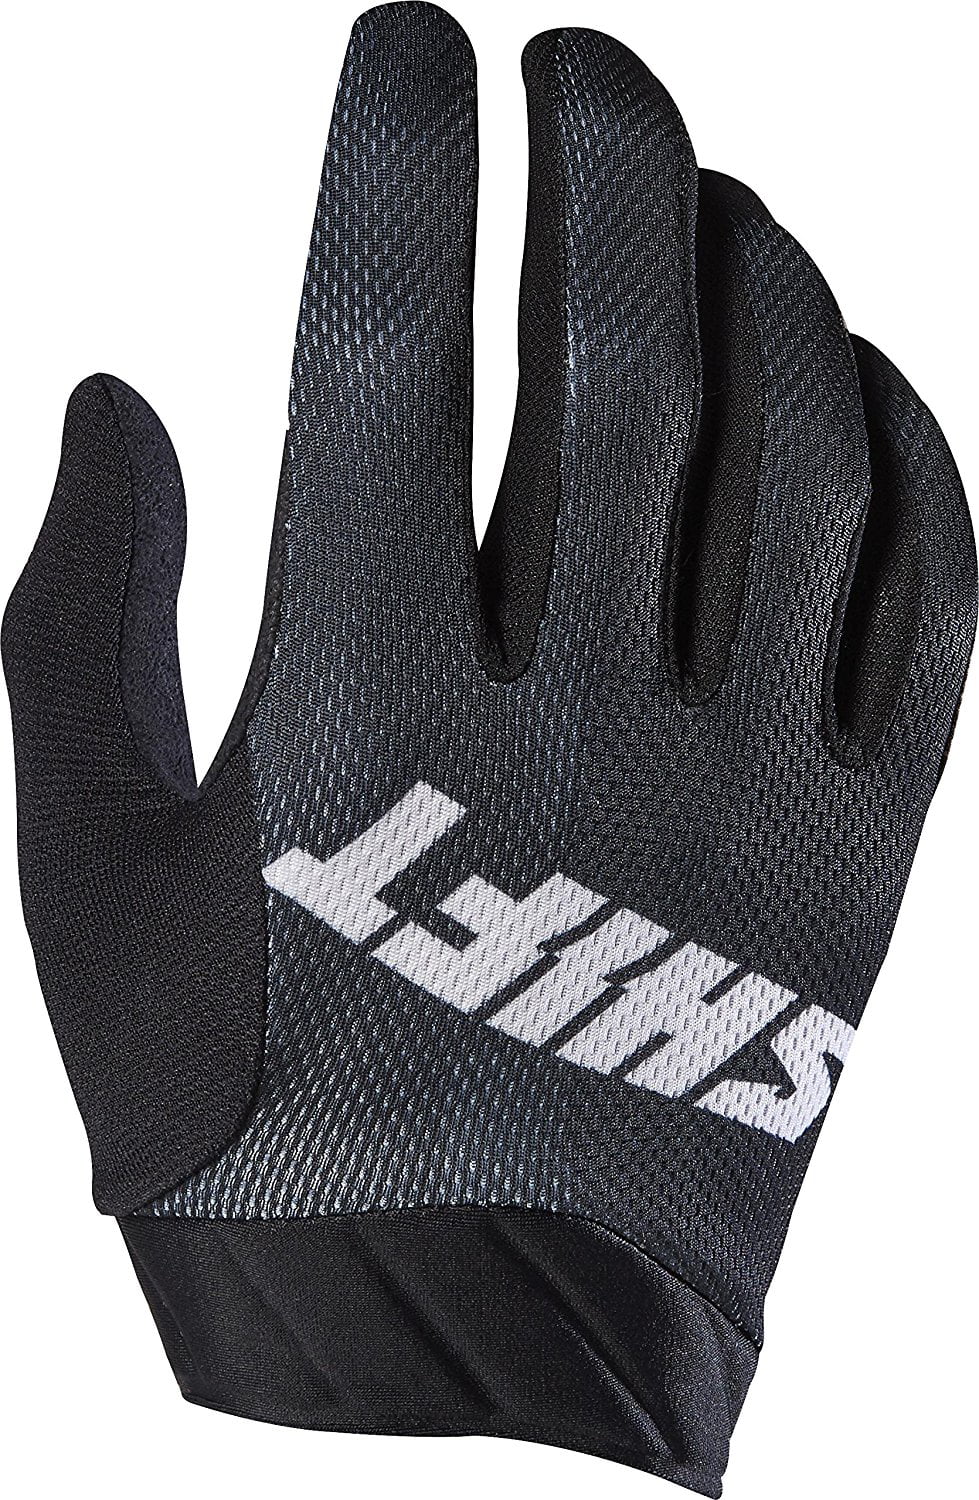 2017 Shift Black Label Air Mainline Gloves-Black-M